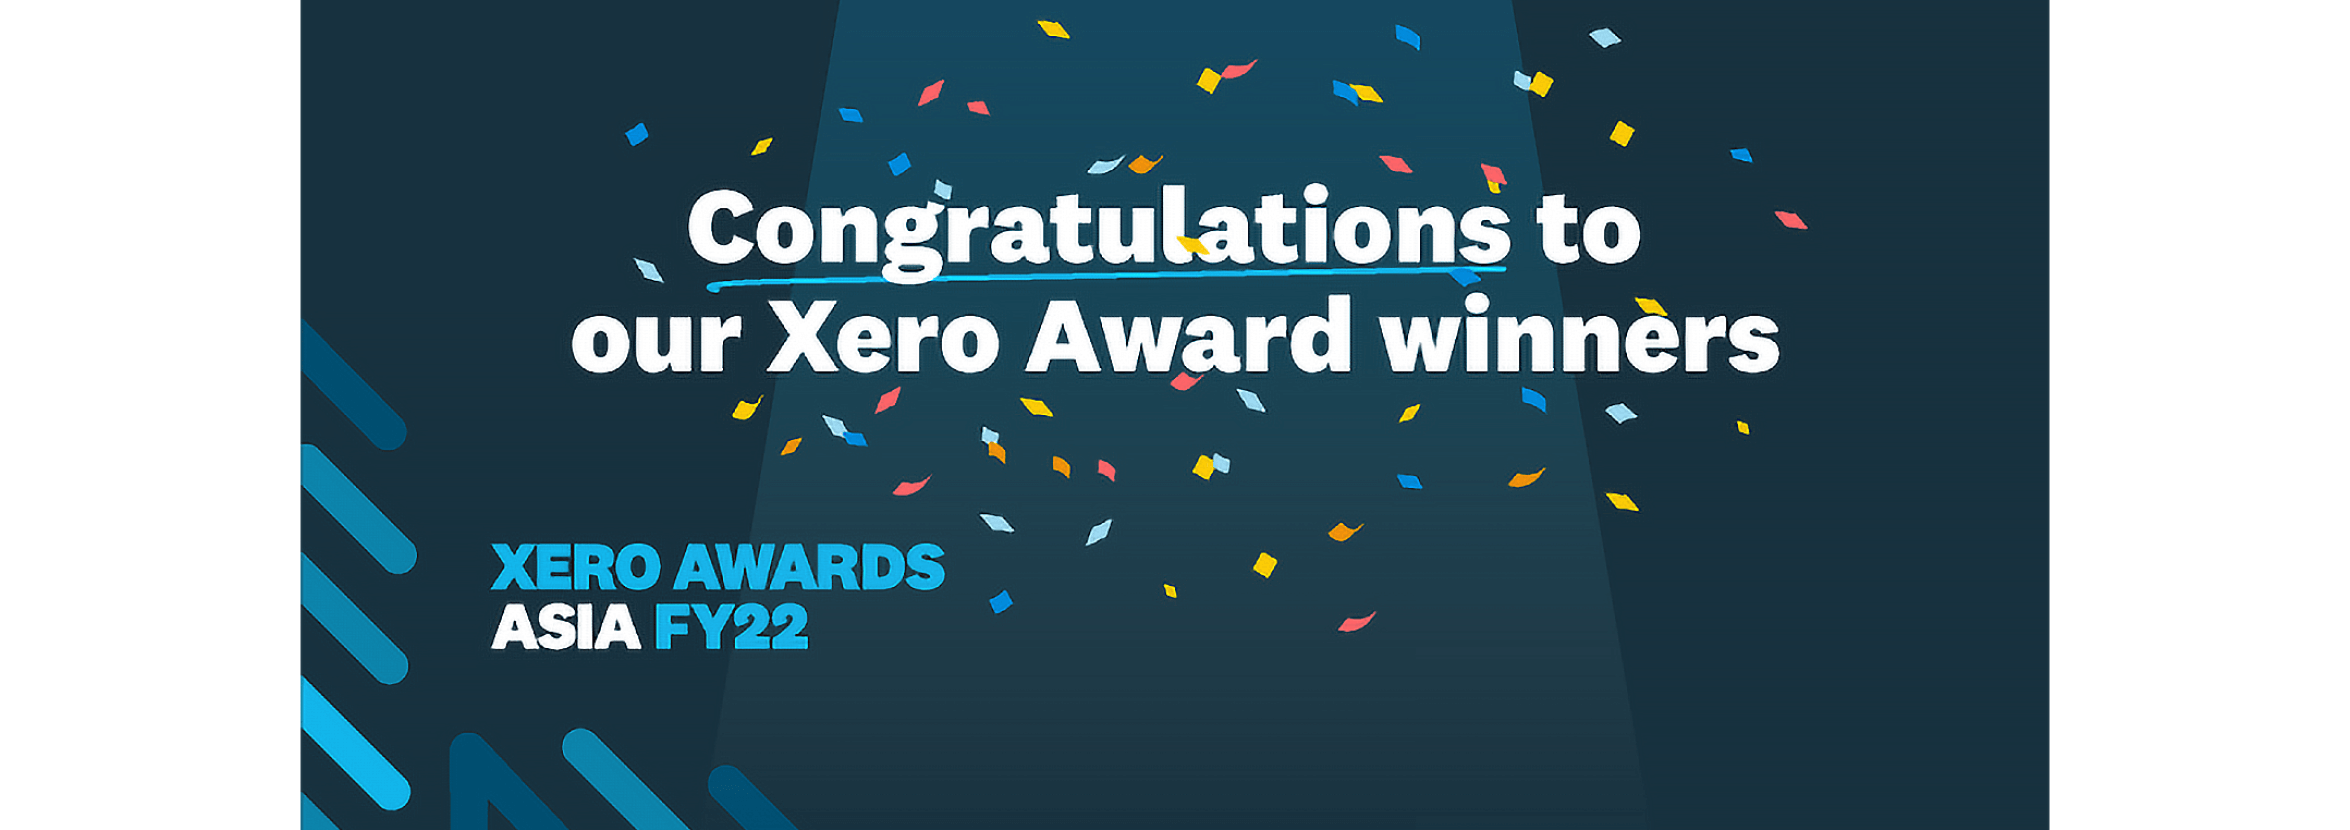 A slide congratulating the Xero Award winners